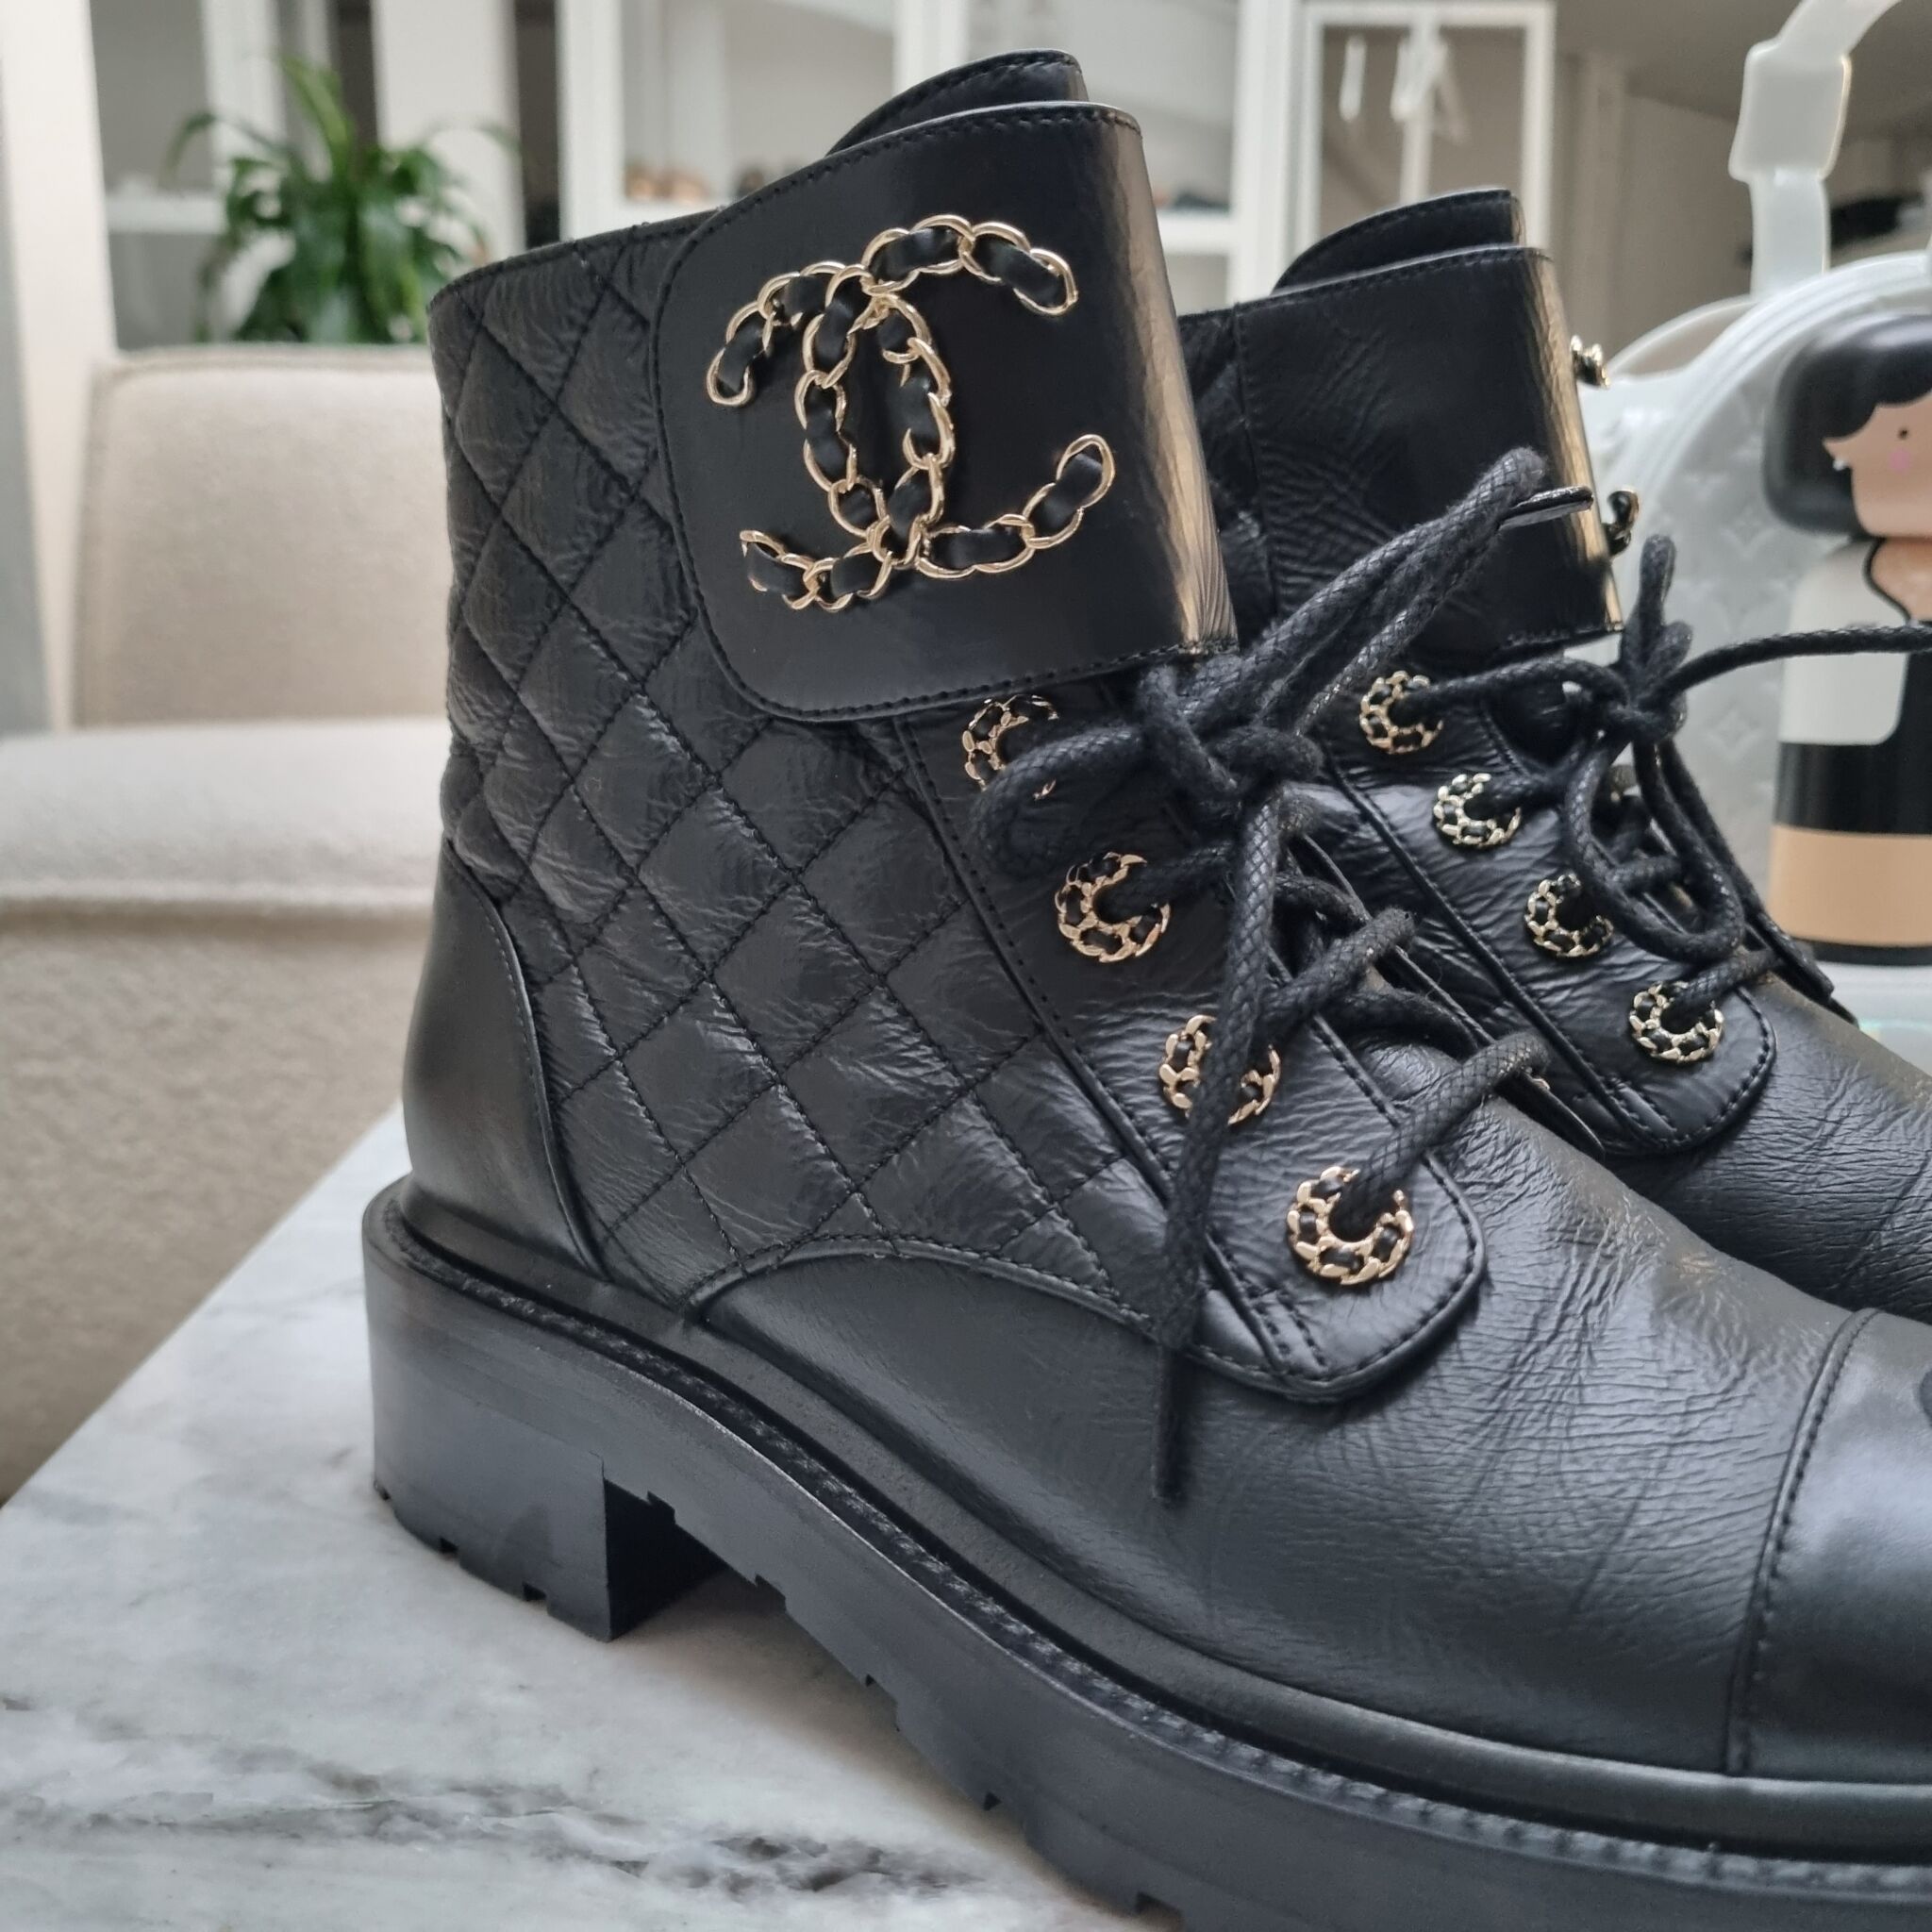 Chanel Combat Boots, Black, 37.5 - Laulay Luxury